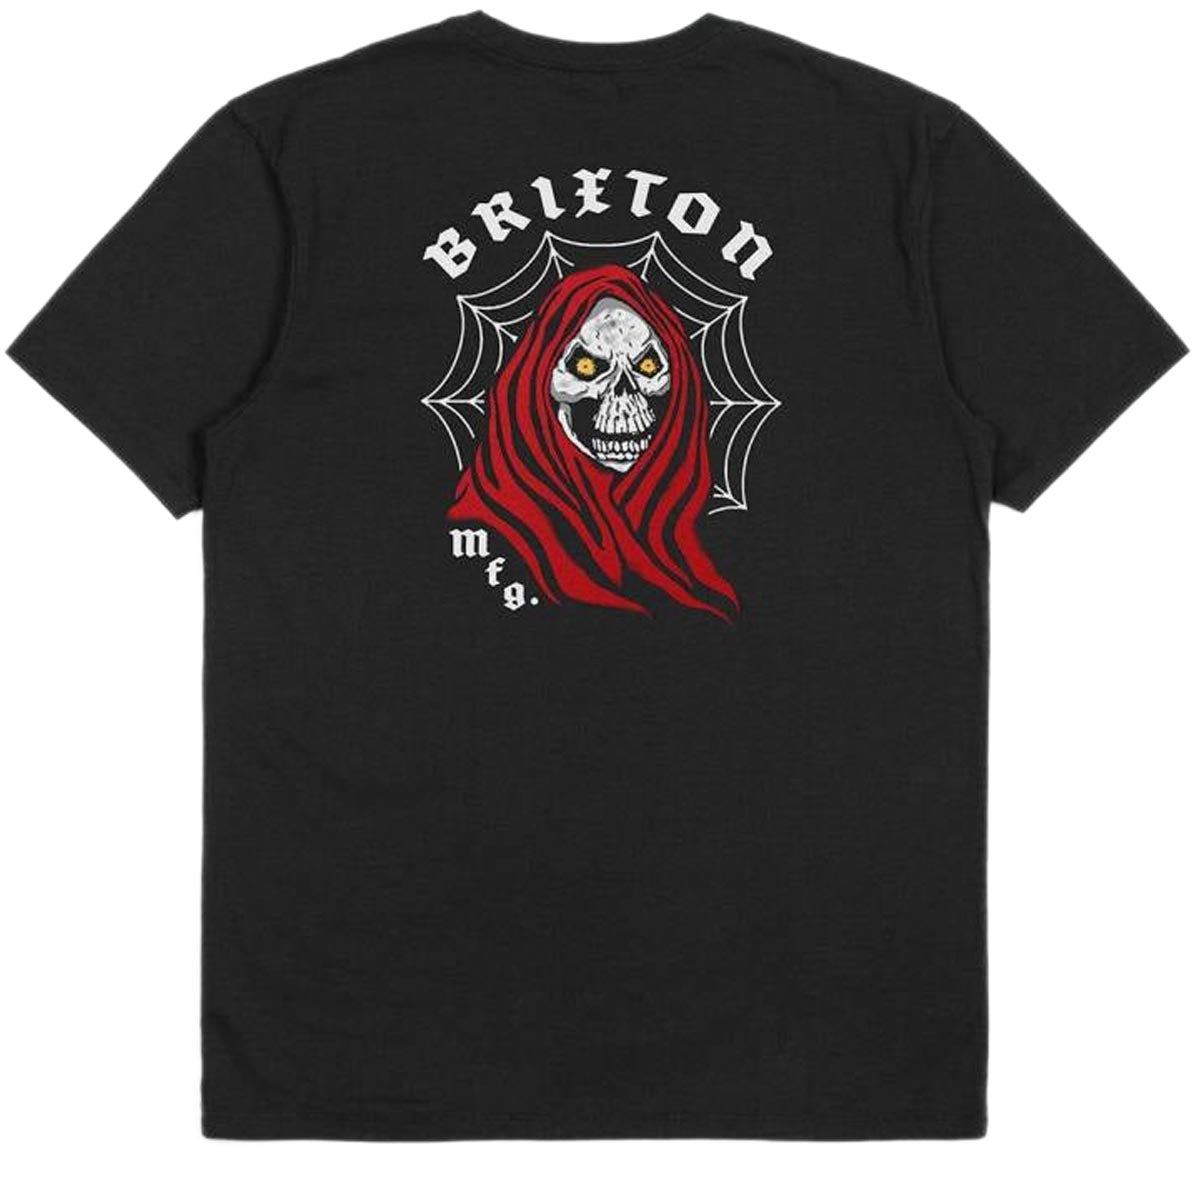 Brixton Reaper T-Shirt - Black image 1